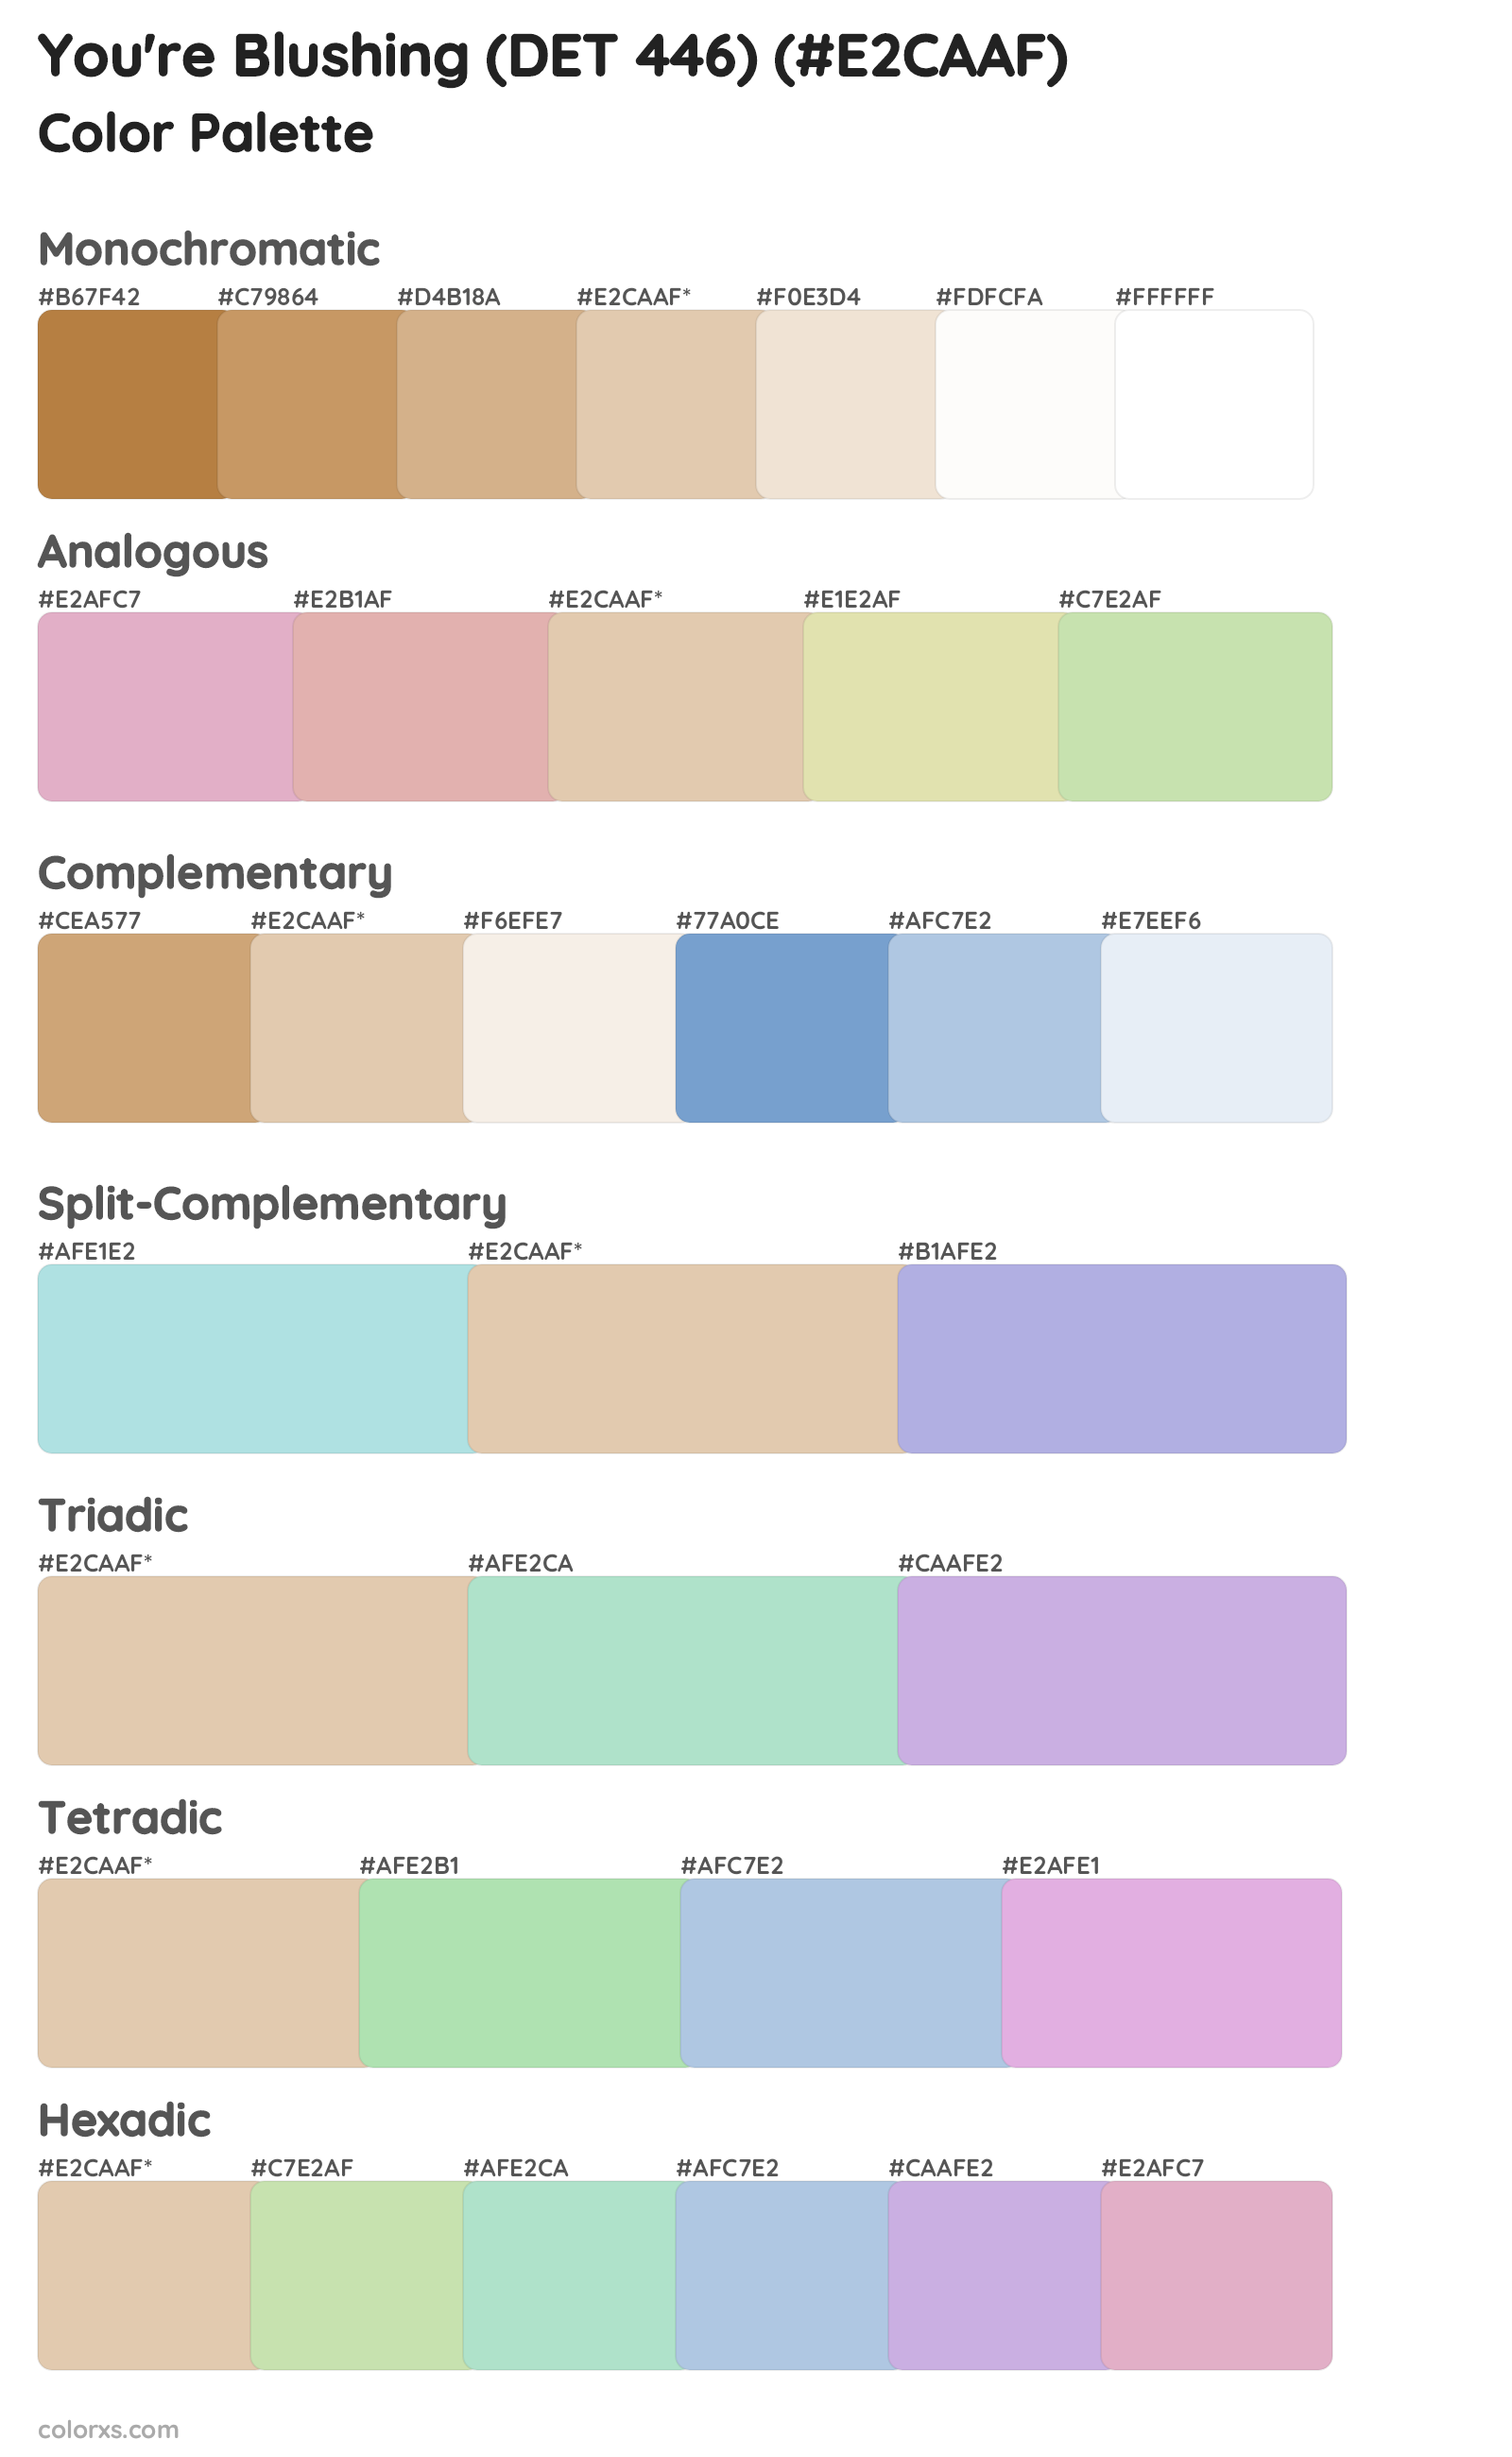 You're Blushing (DET 446) Color Scheme Palettes